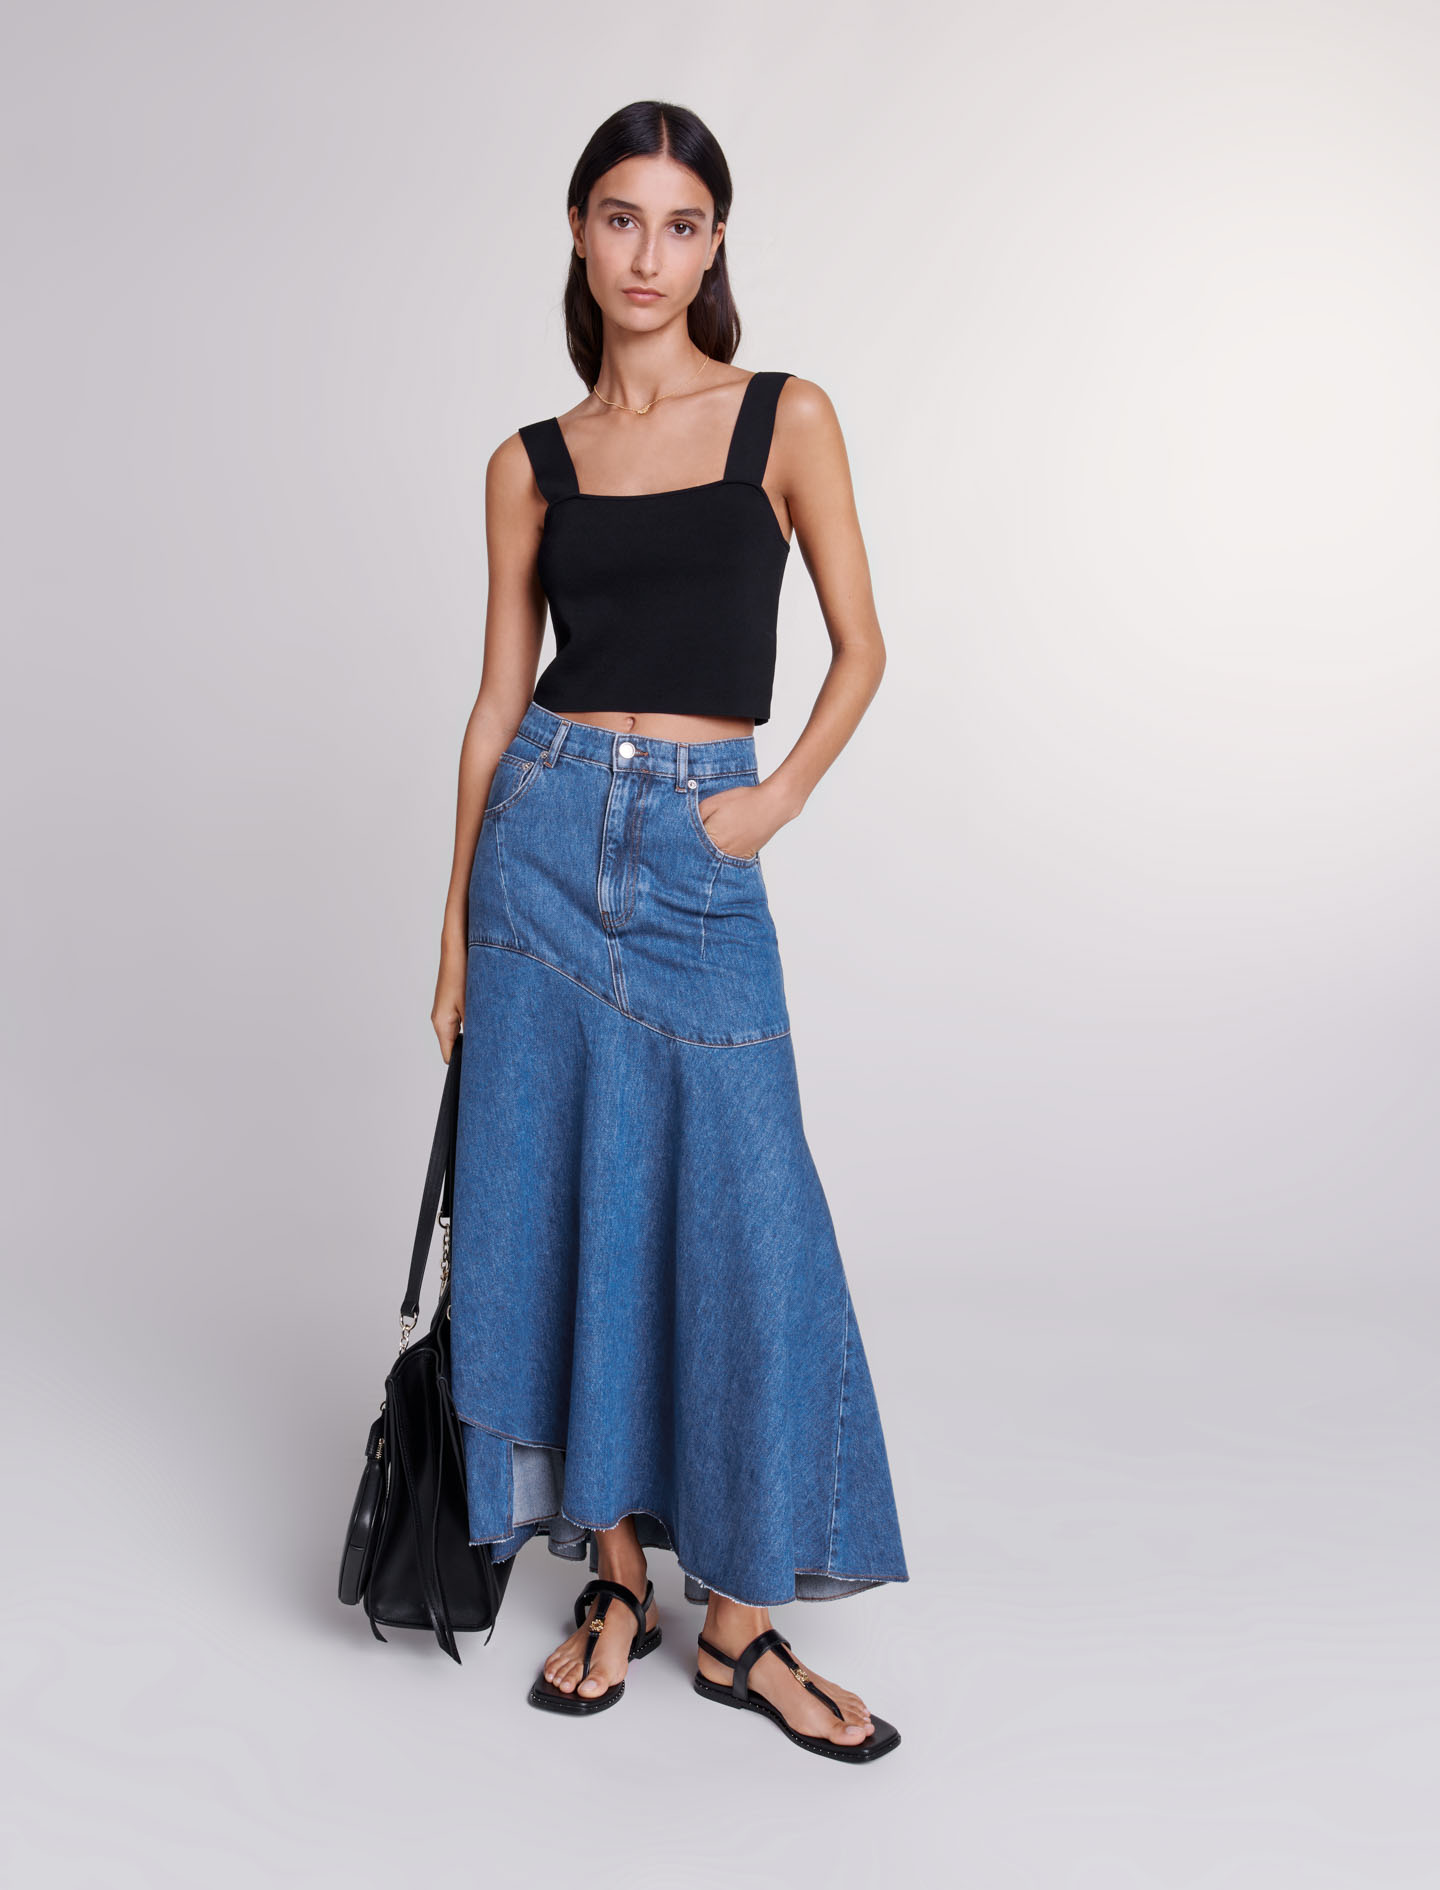 Maje Woman's cotton Pocket lining: Asymmetrical denim skirt for Spring/Summer, in color Blue / Blue